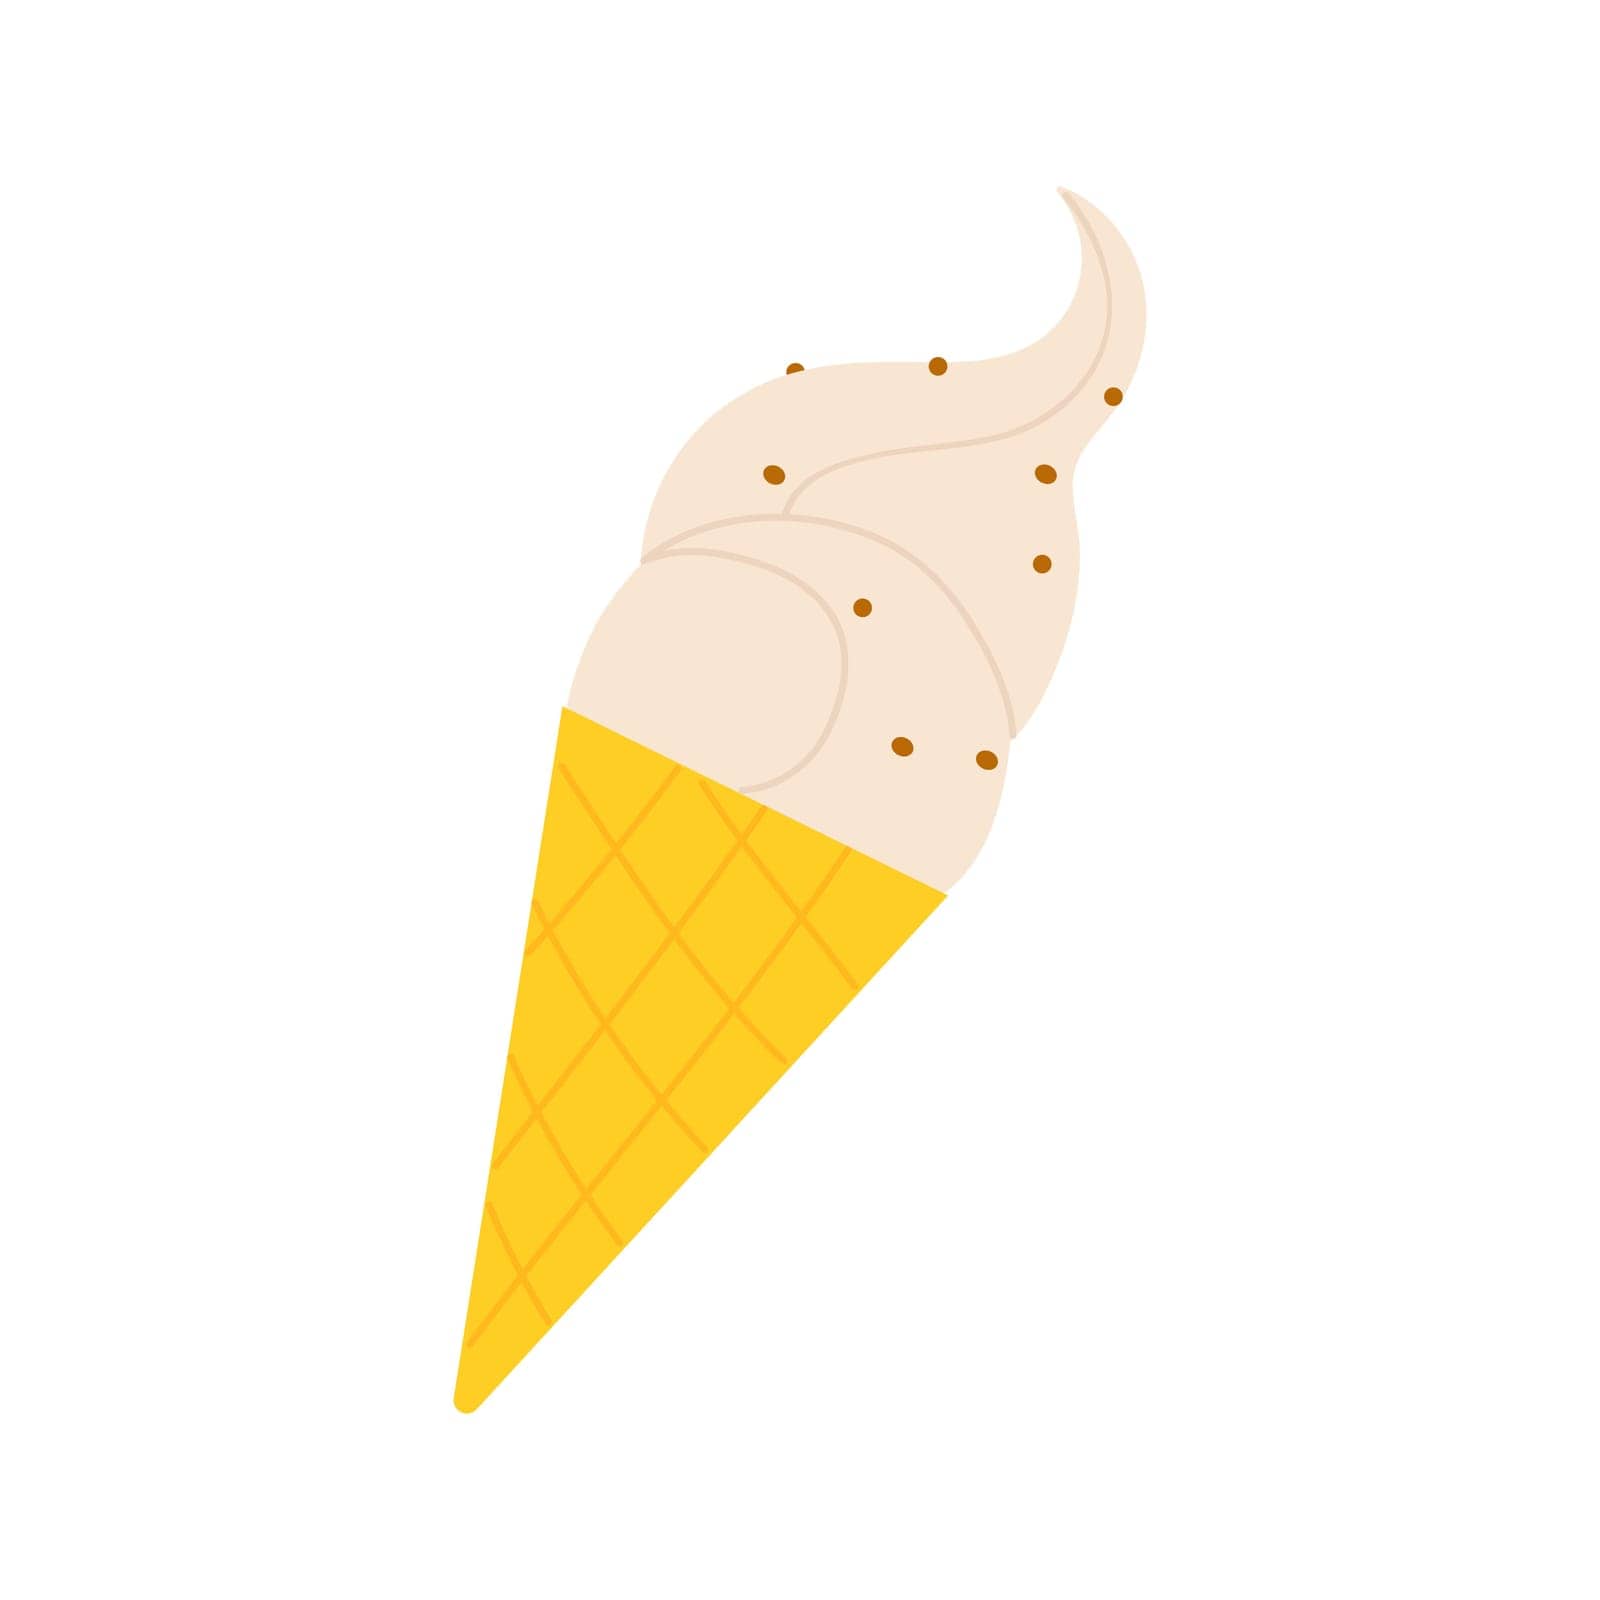 Sweet cone ice cream. Park amusement dessert cart, circus show snacks cartoon vector illustration